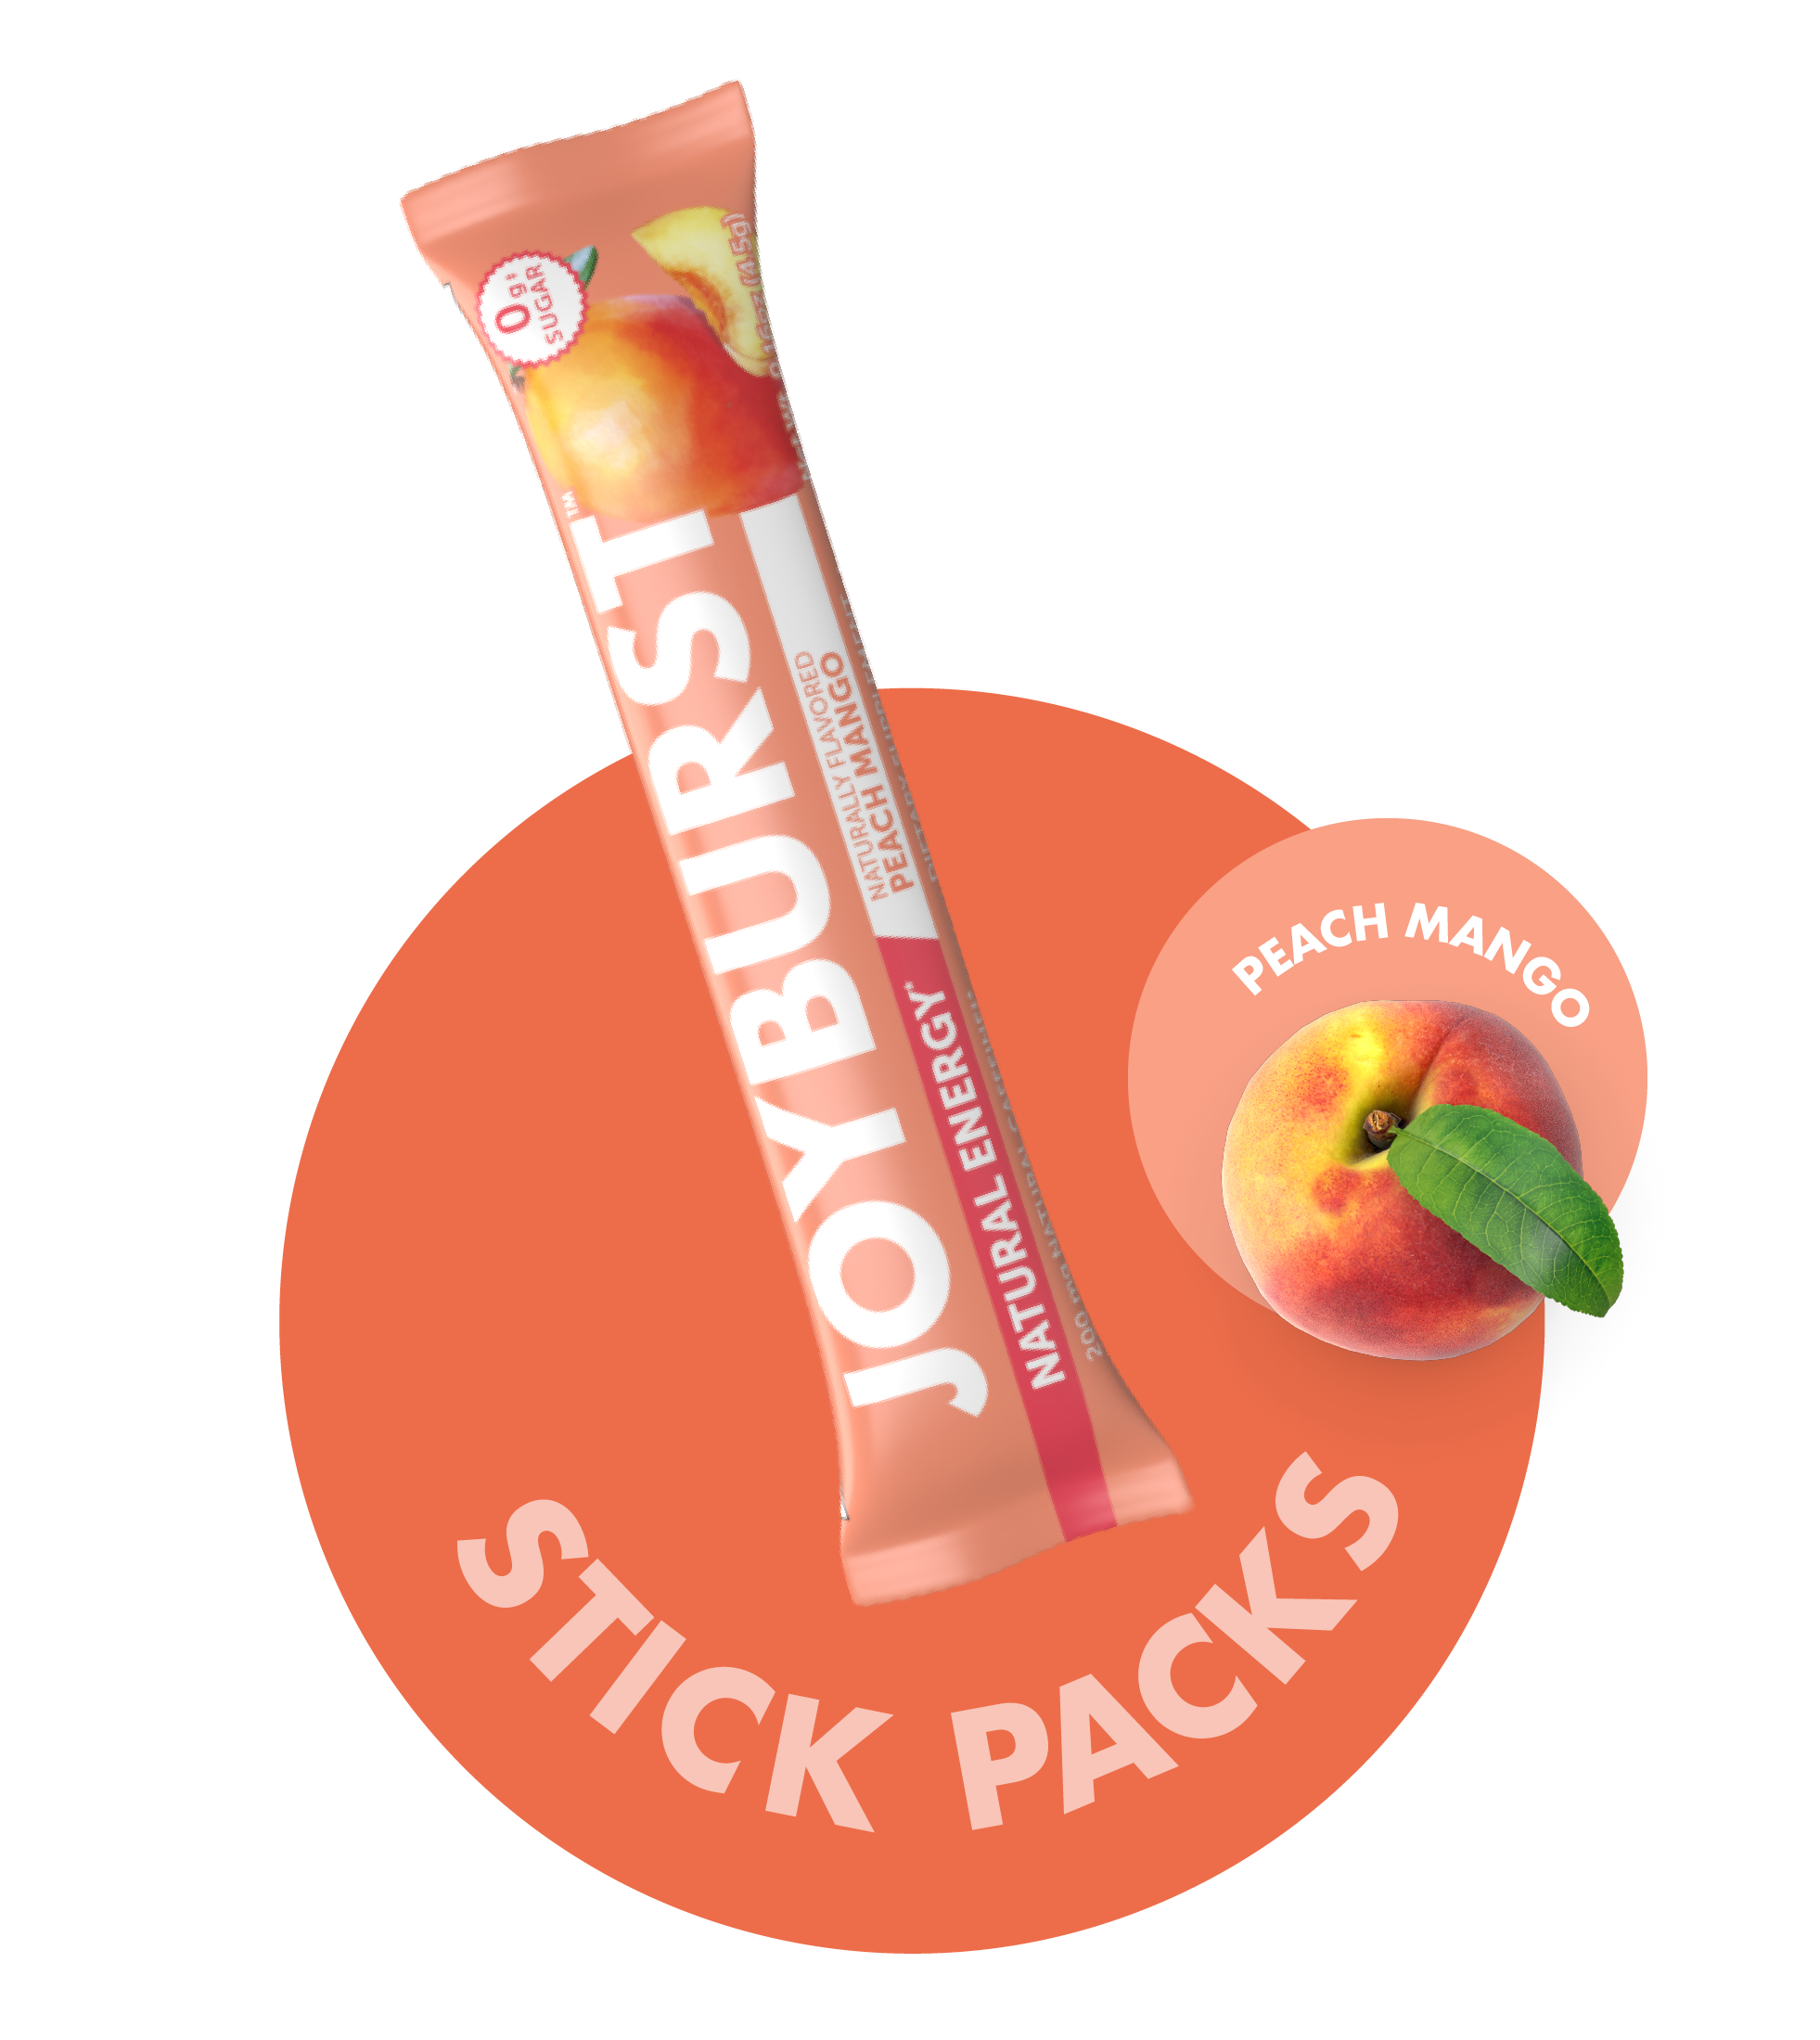 Joyburst Energy Stick - Peach Mango